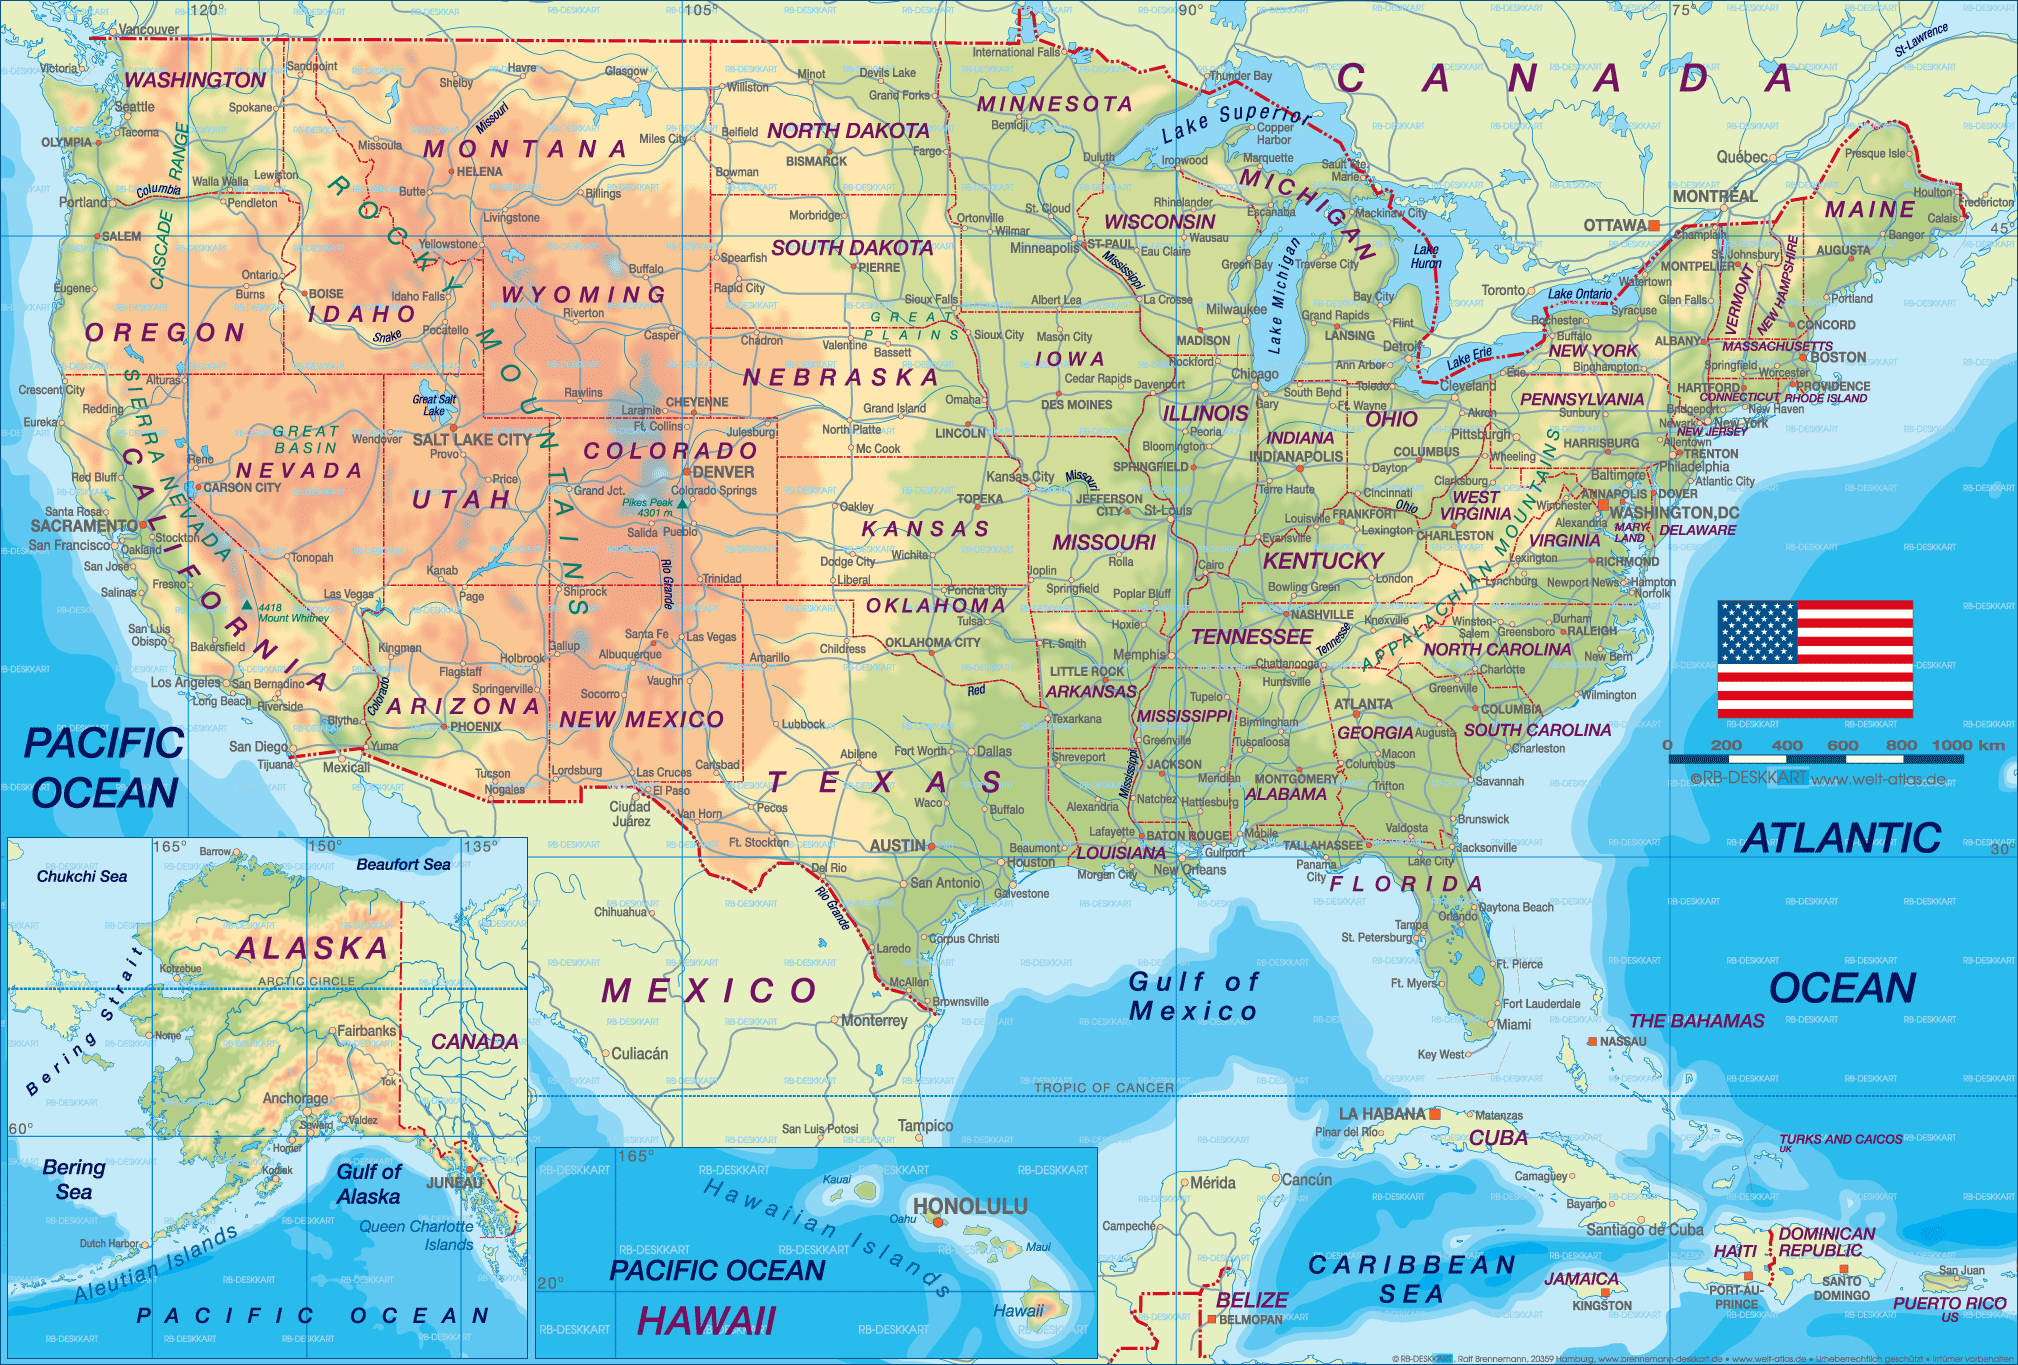 United States Cities Map Mapsof